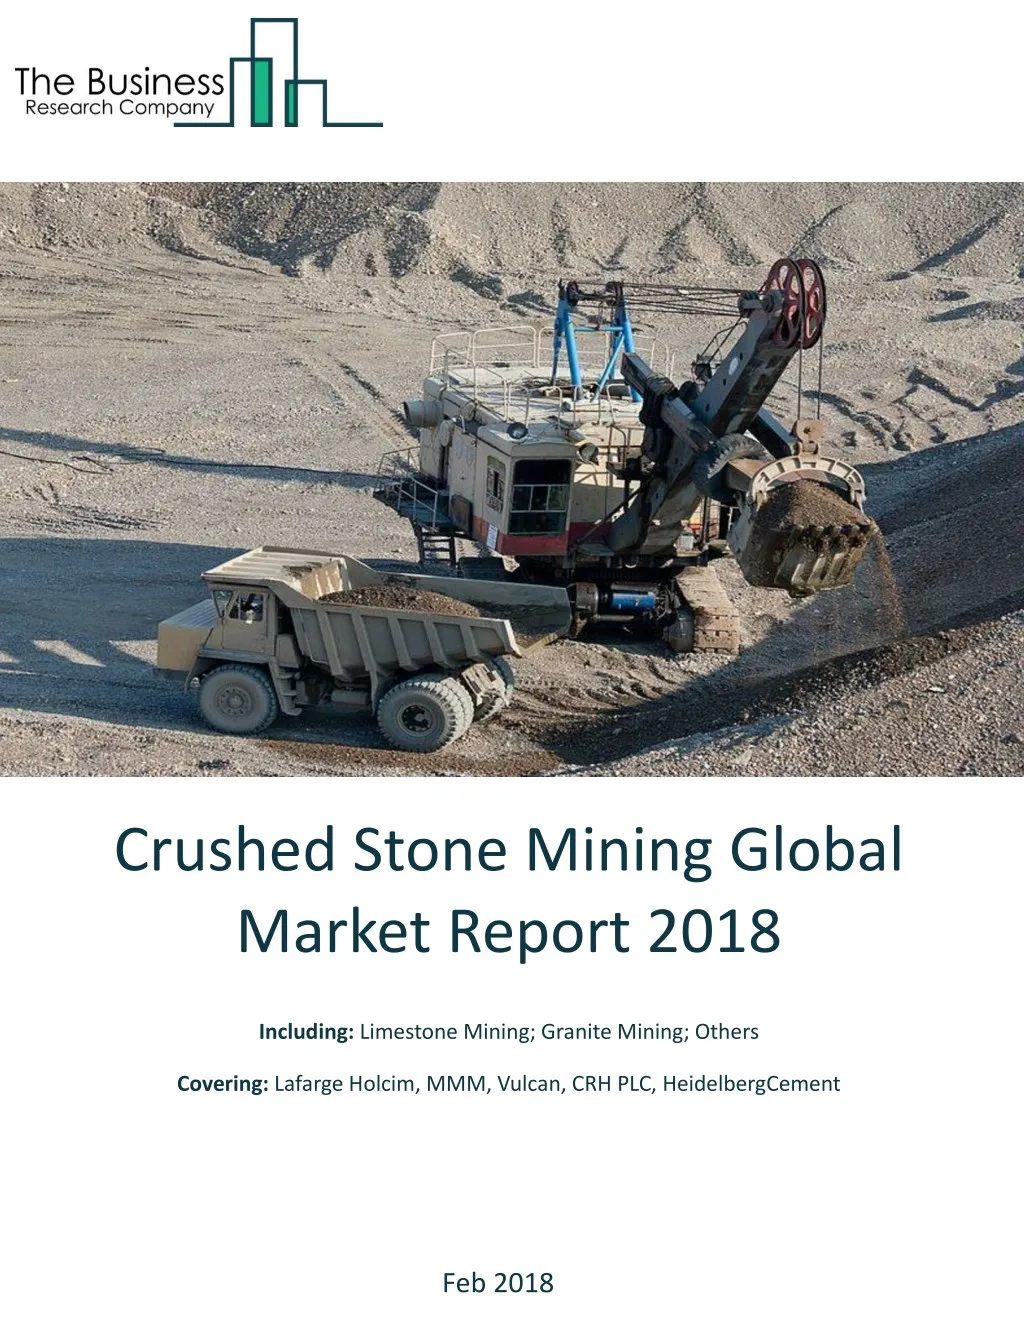 crushed stone mining global market report 2018